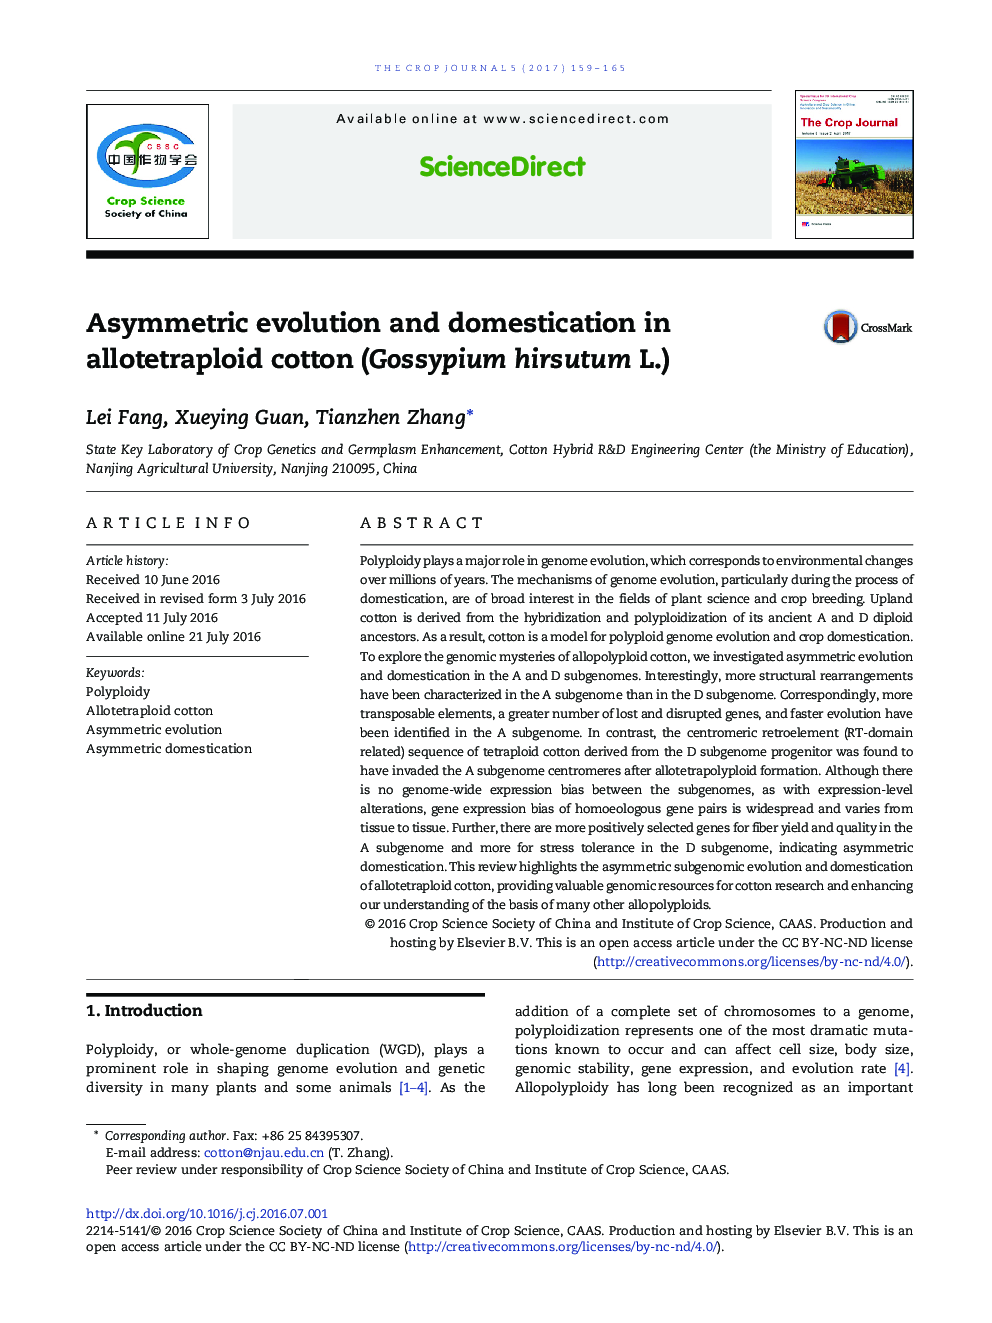 Asymmetric evolution and domestication in allotetraploid cotton (Gossypium hirsutum L.)